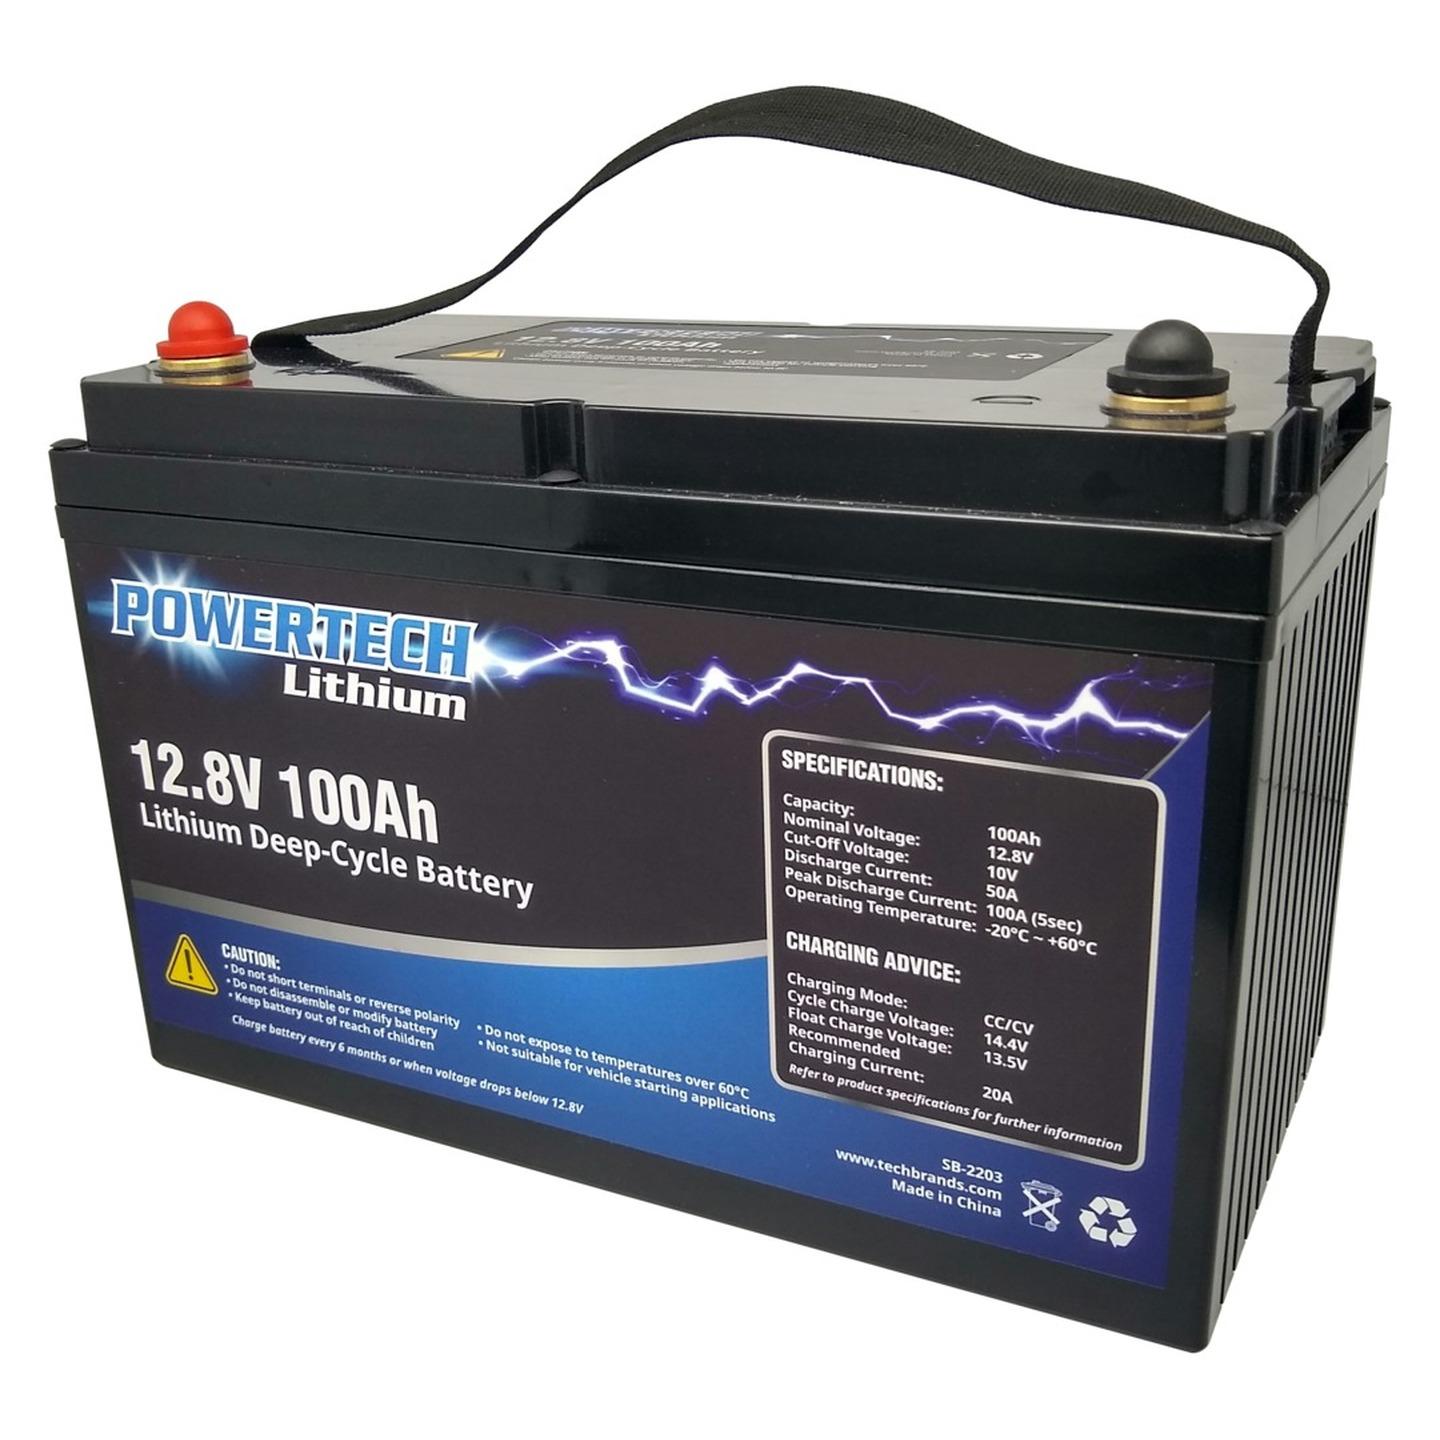 12.8V 100Ah Lithium Deep Cycle Battery